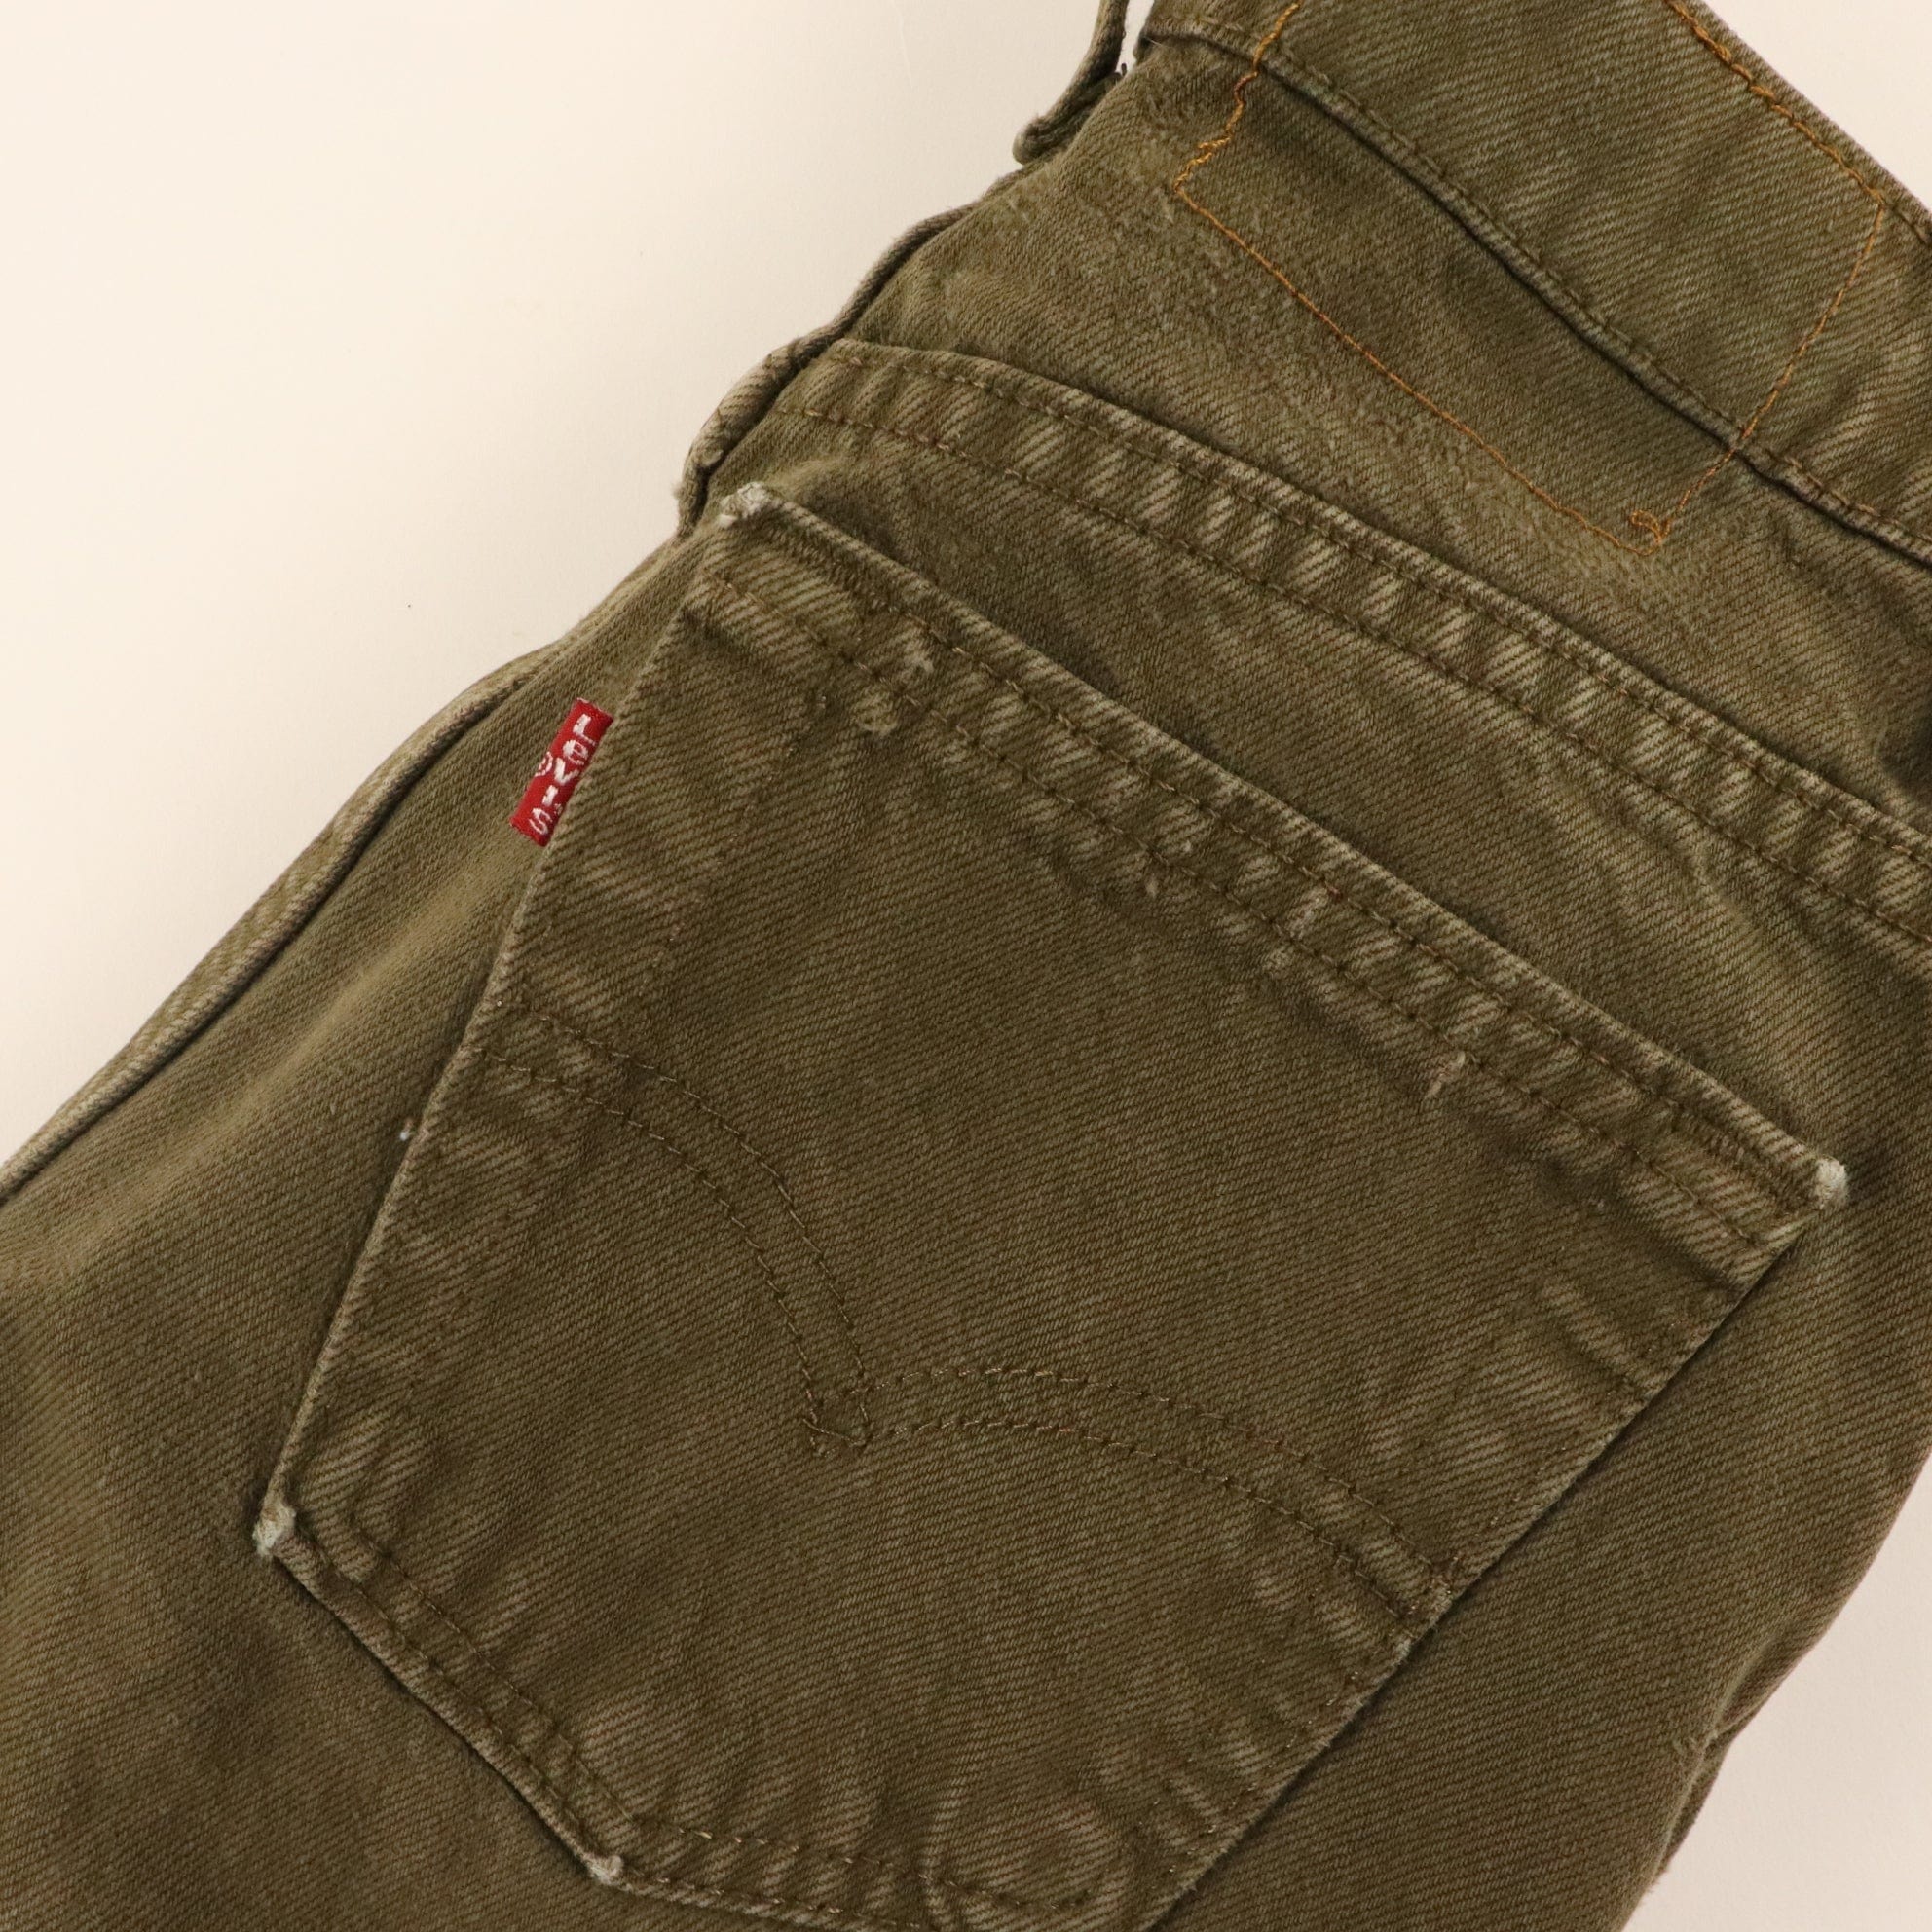 Vintage Levi's 512 Slim Fit Denim Jeans Women's Size 7 Fits Like 26x30